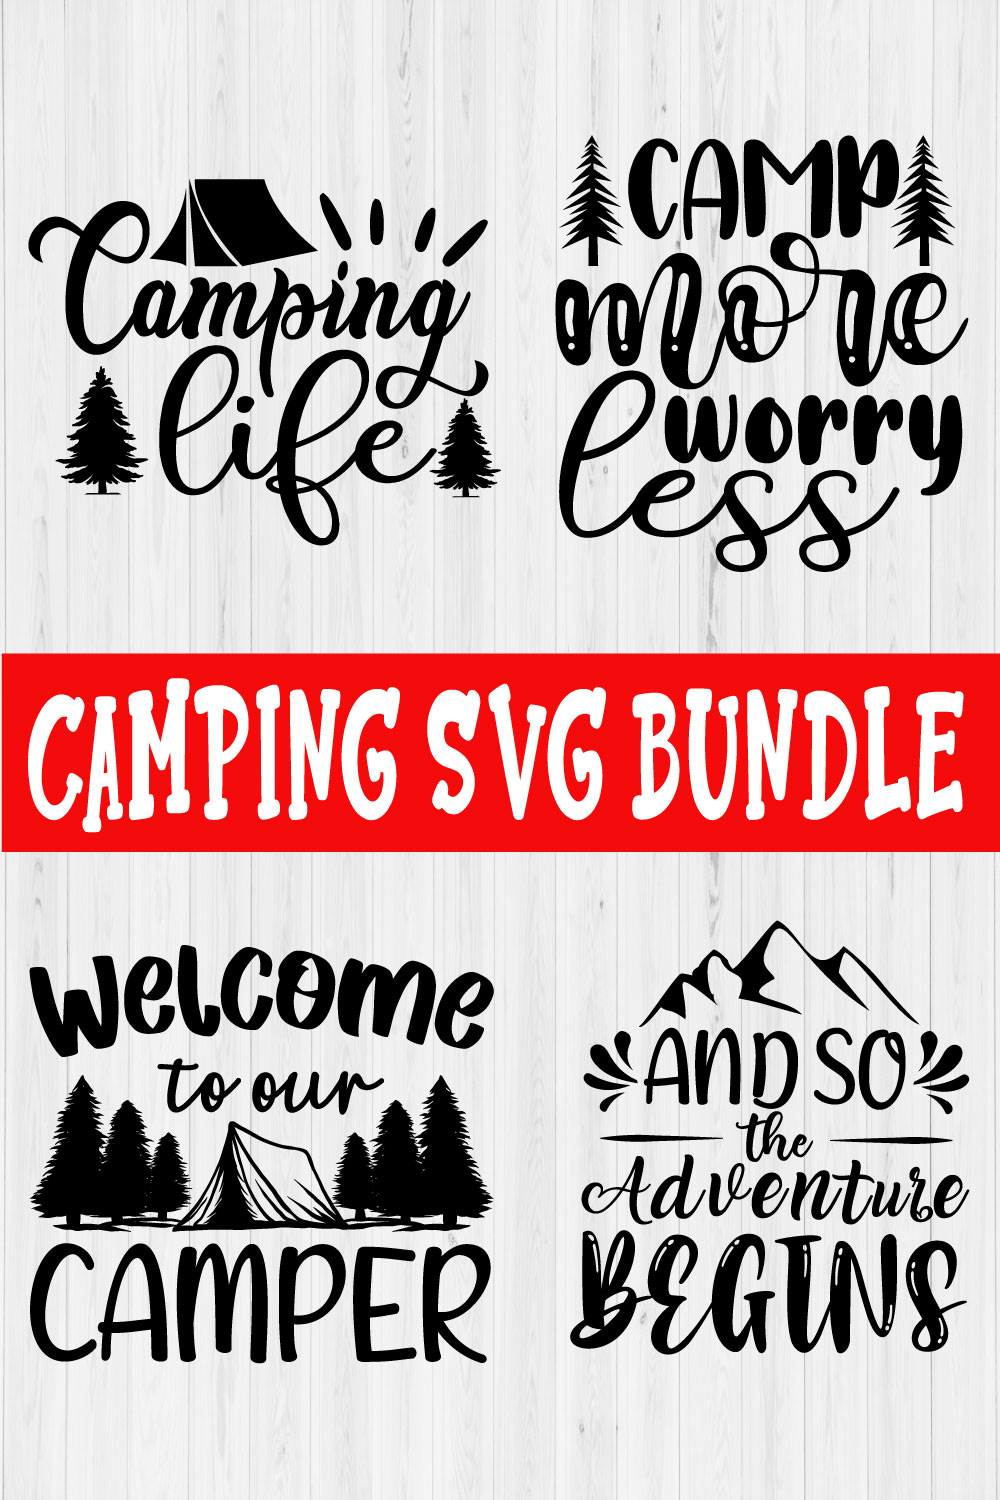 Camping Svg Bundle Vol1 pinterest preview image.